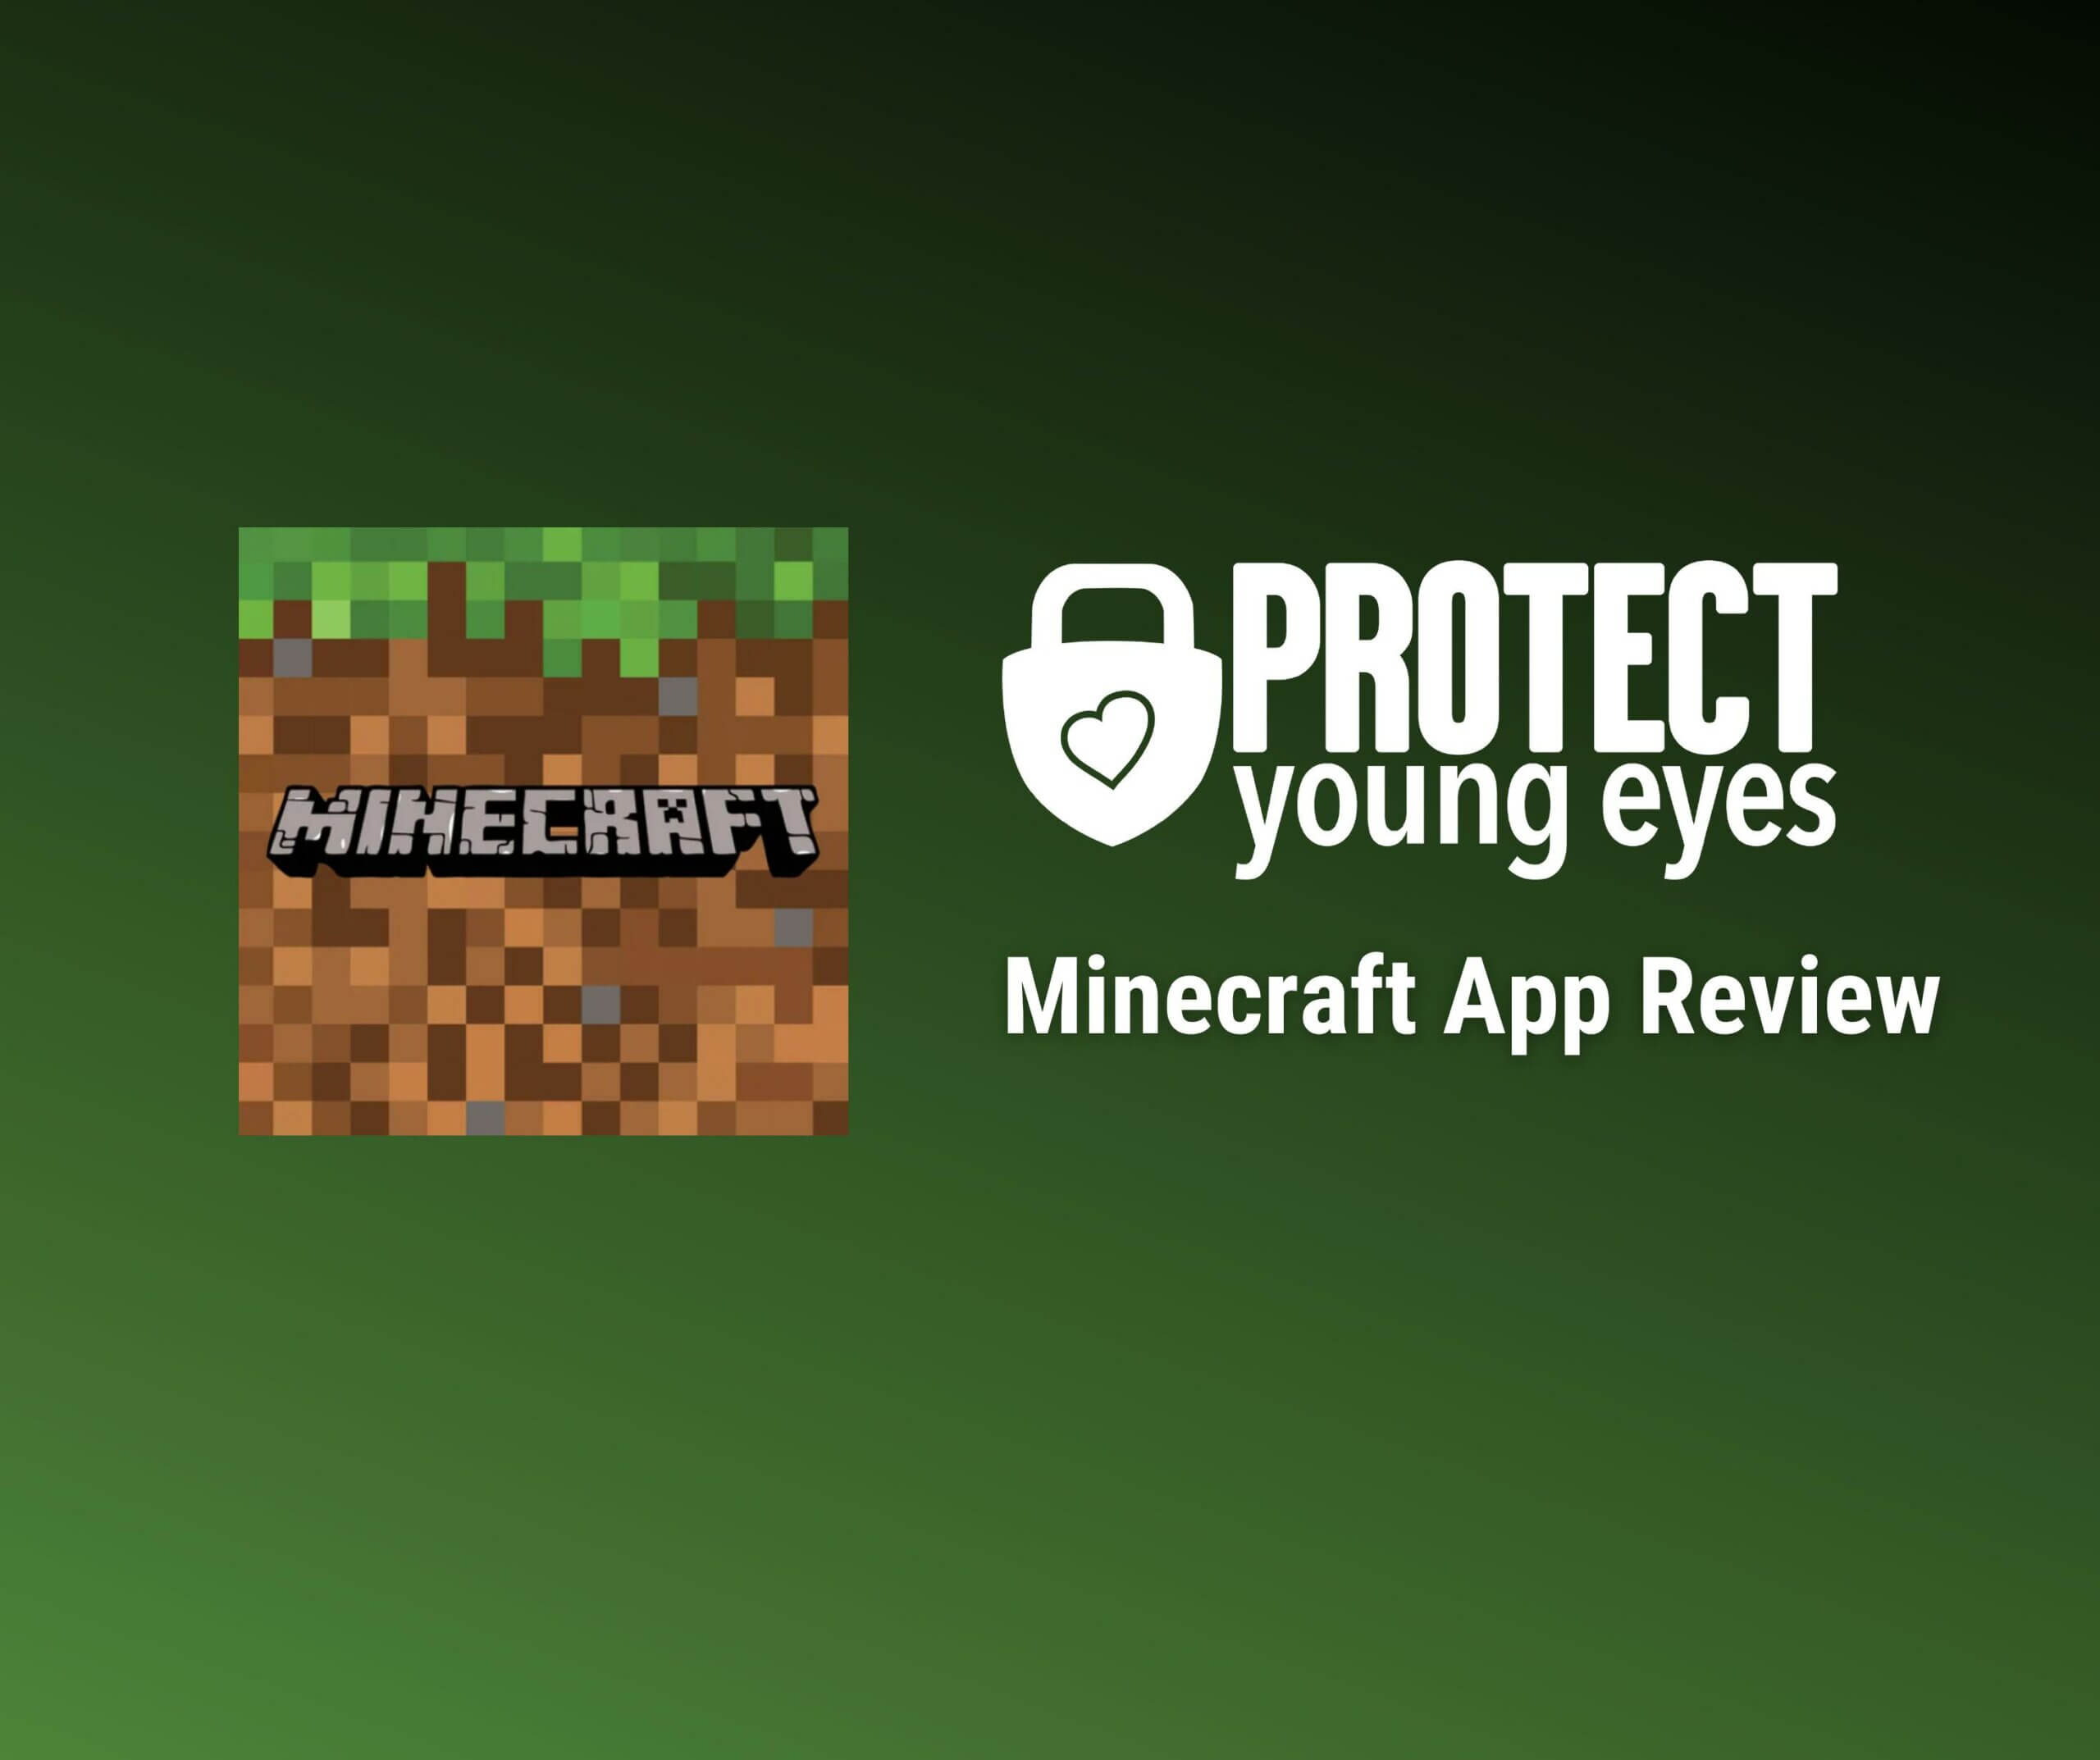 Minecraft: Pocket Edition gets massive update